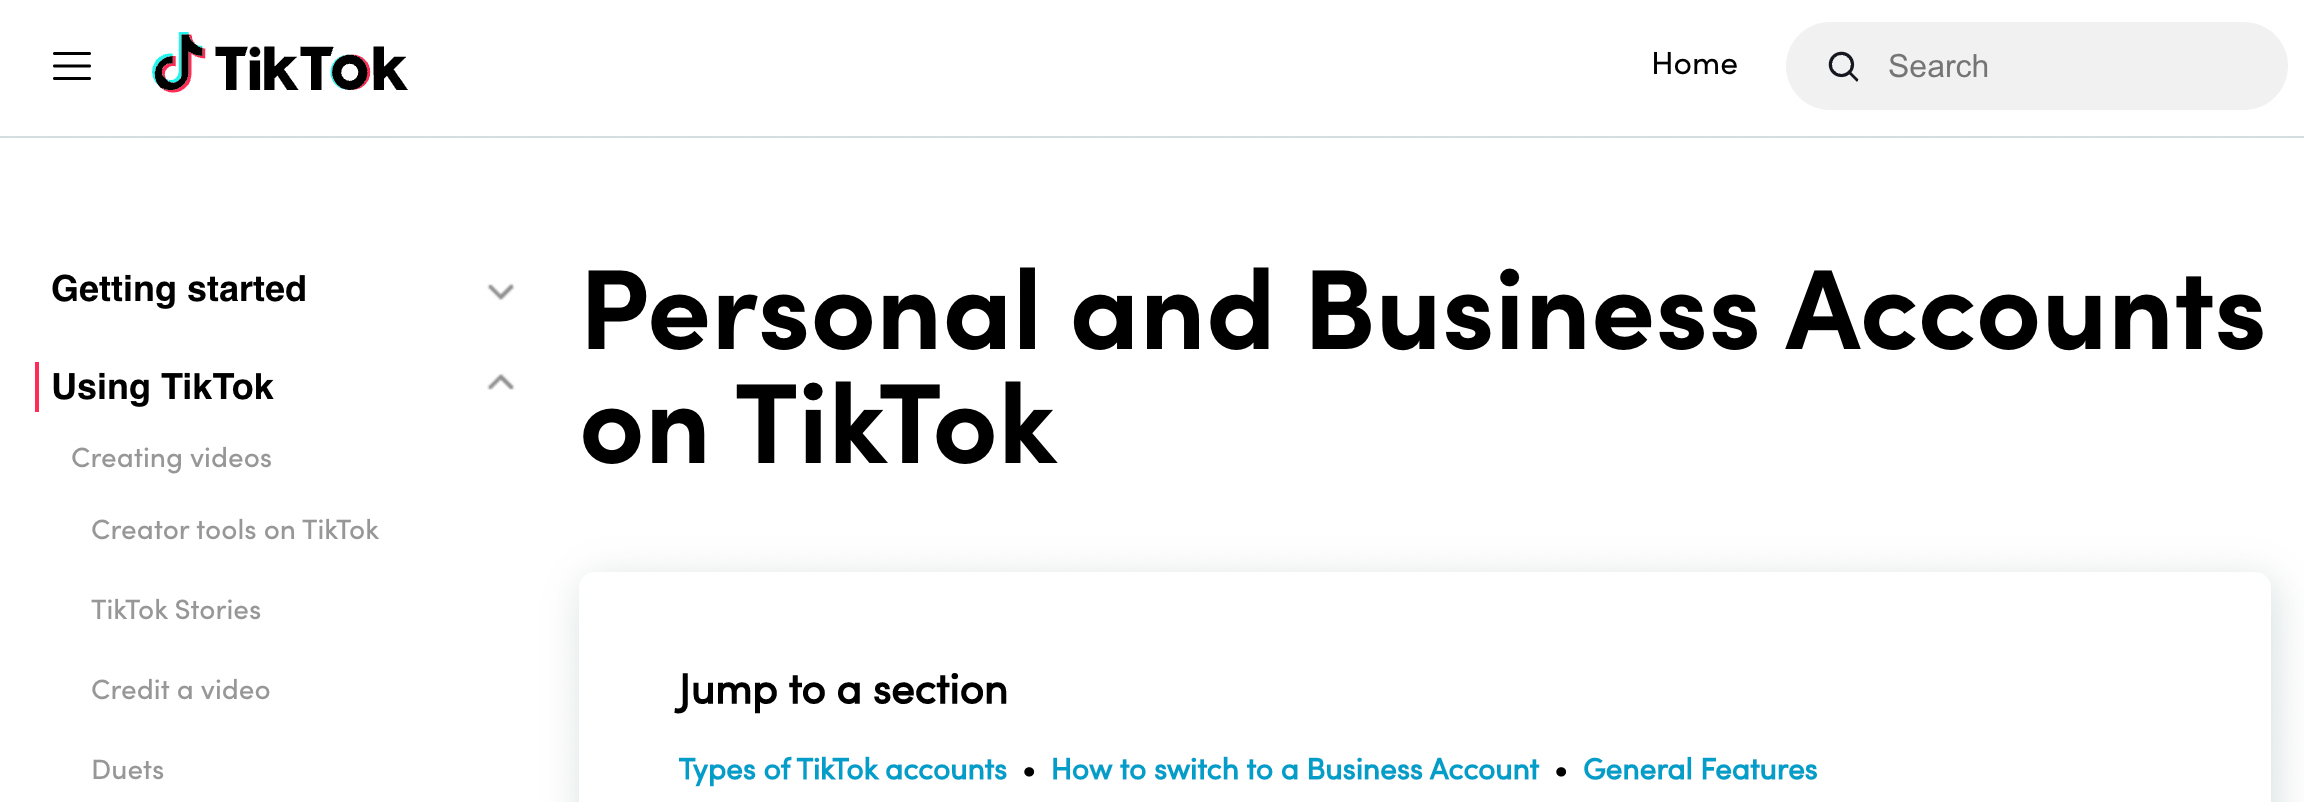 tiktok-account-types